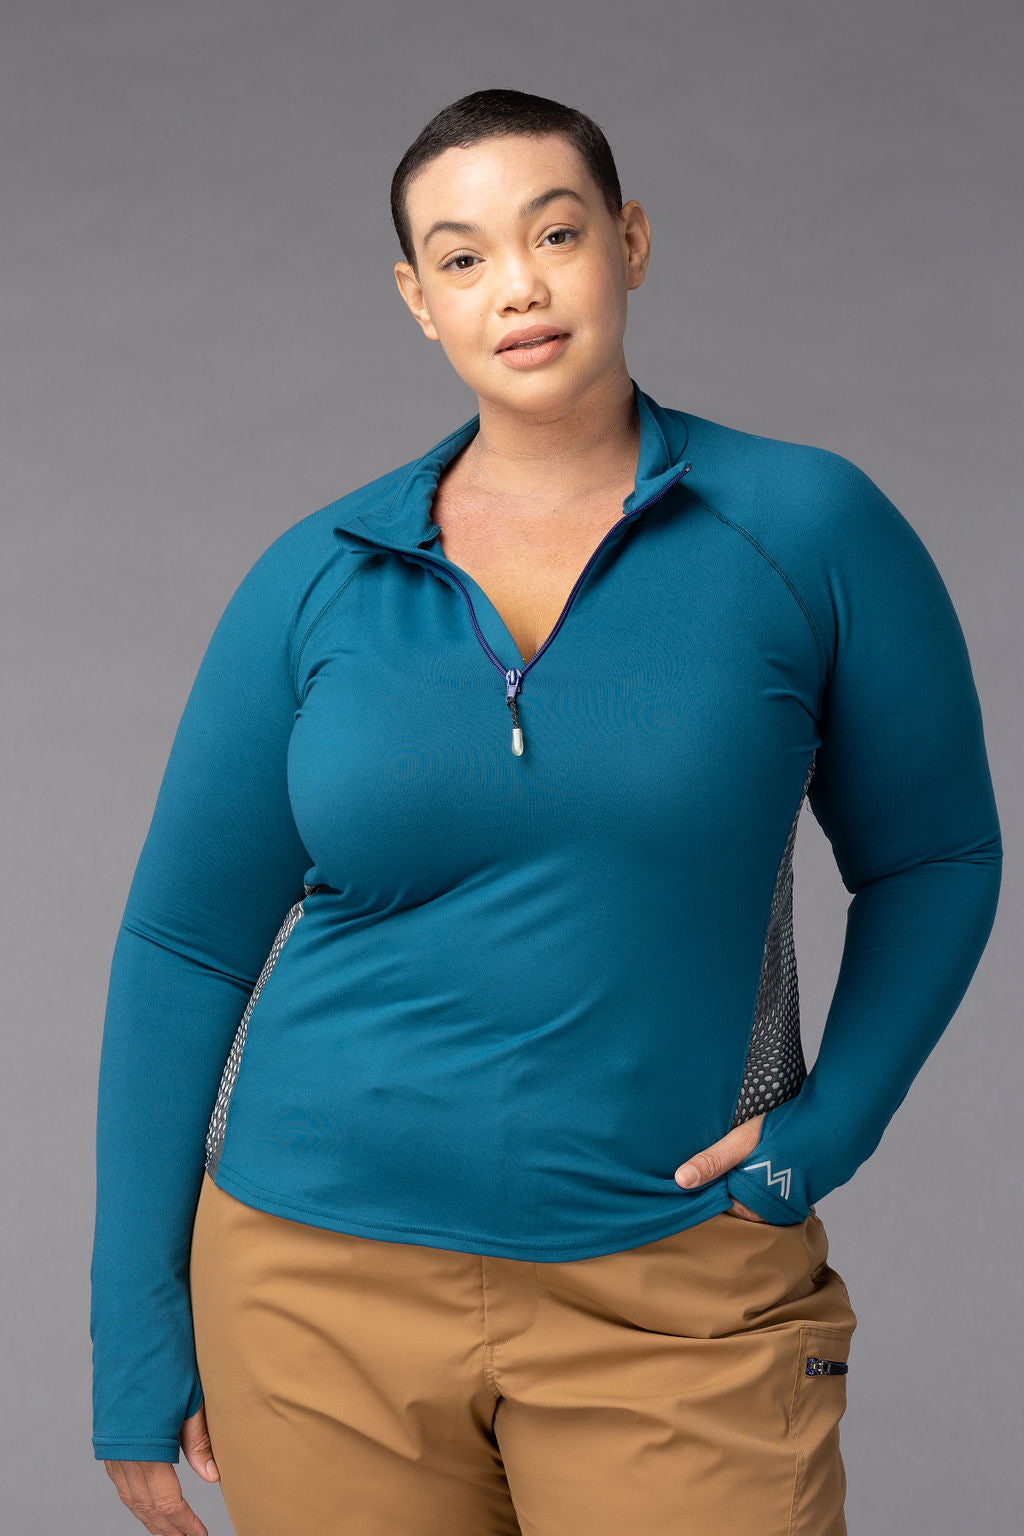 Woman looking at the camera wearing a quarter-zip long sleeve shirt and hiking pants.